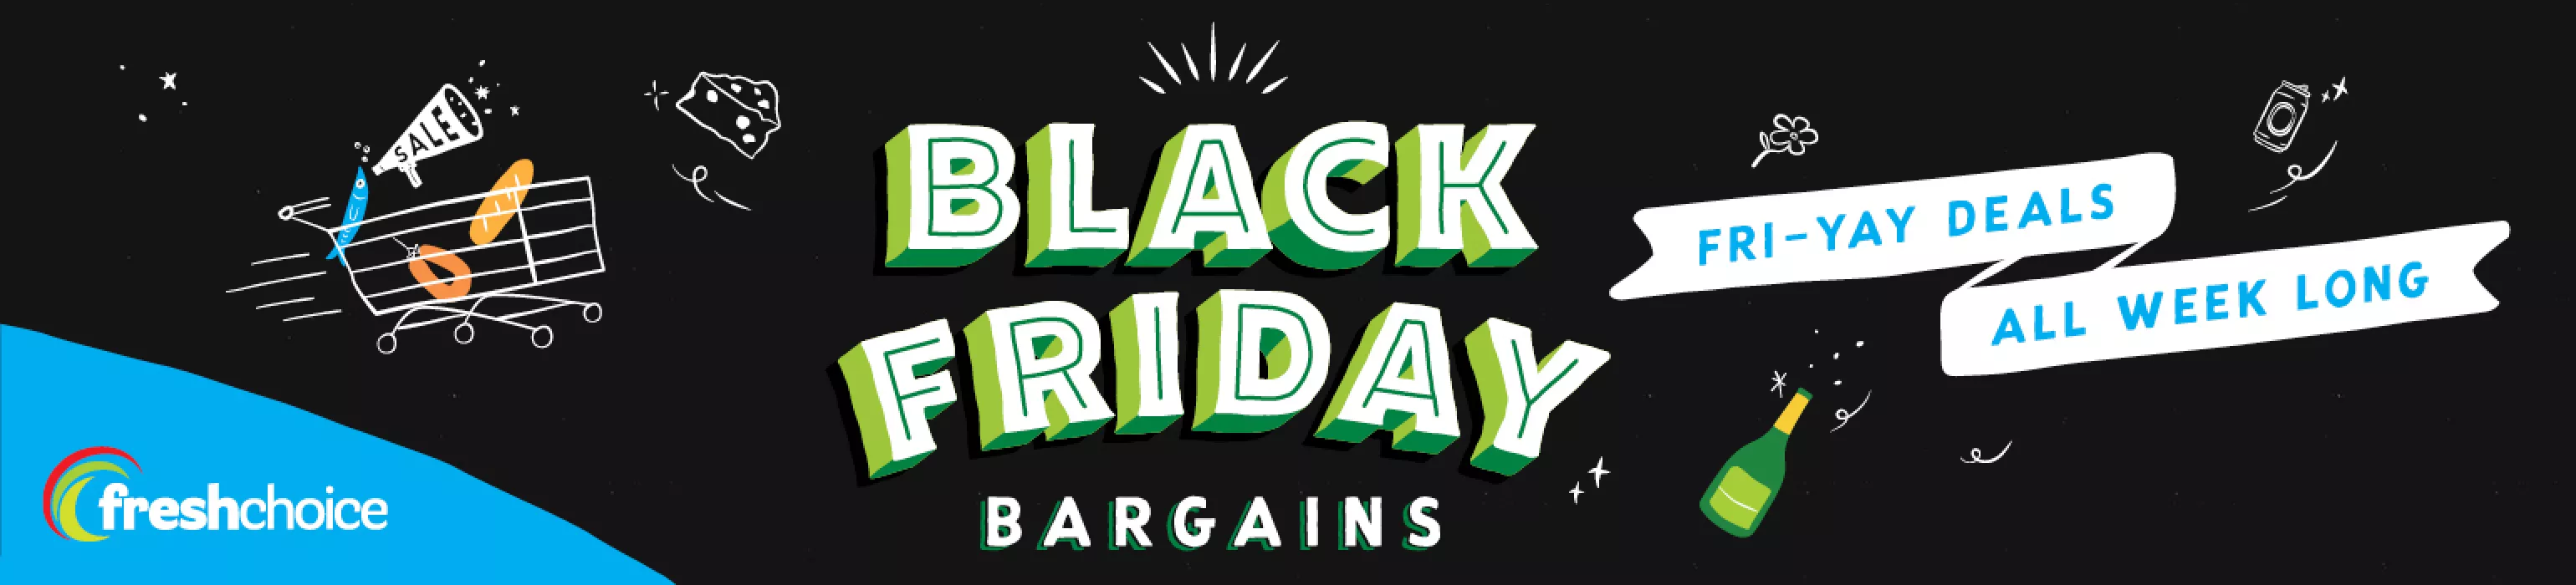 Black Friday Deals Shop Now!